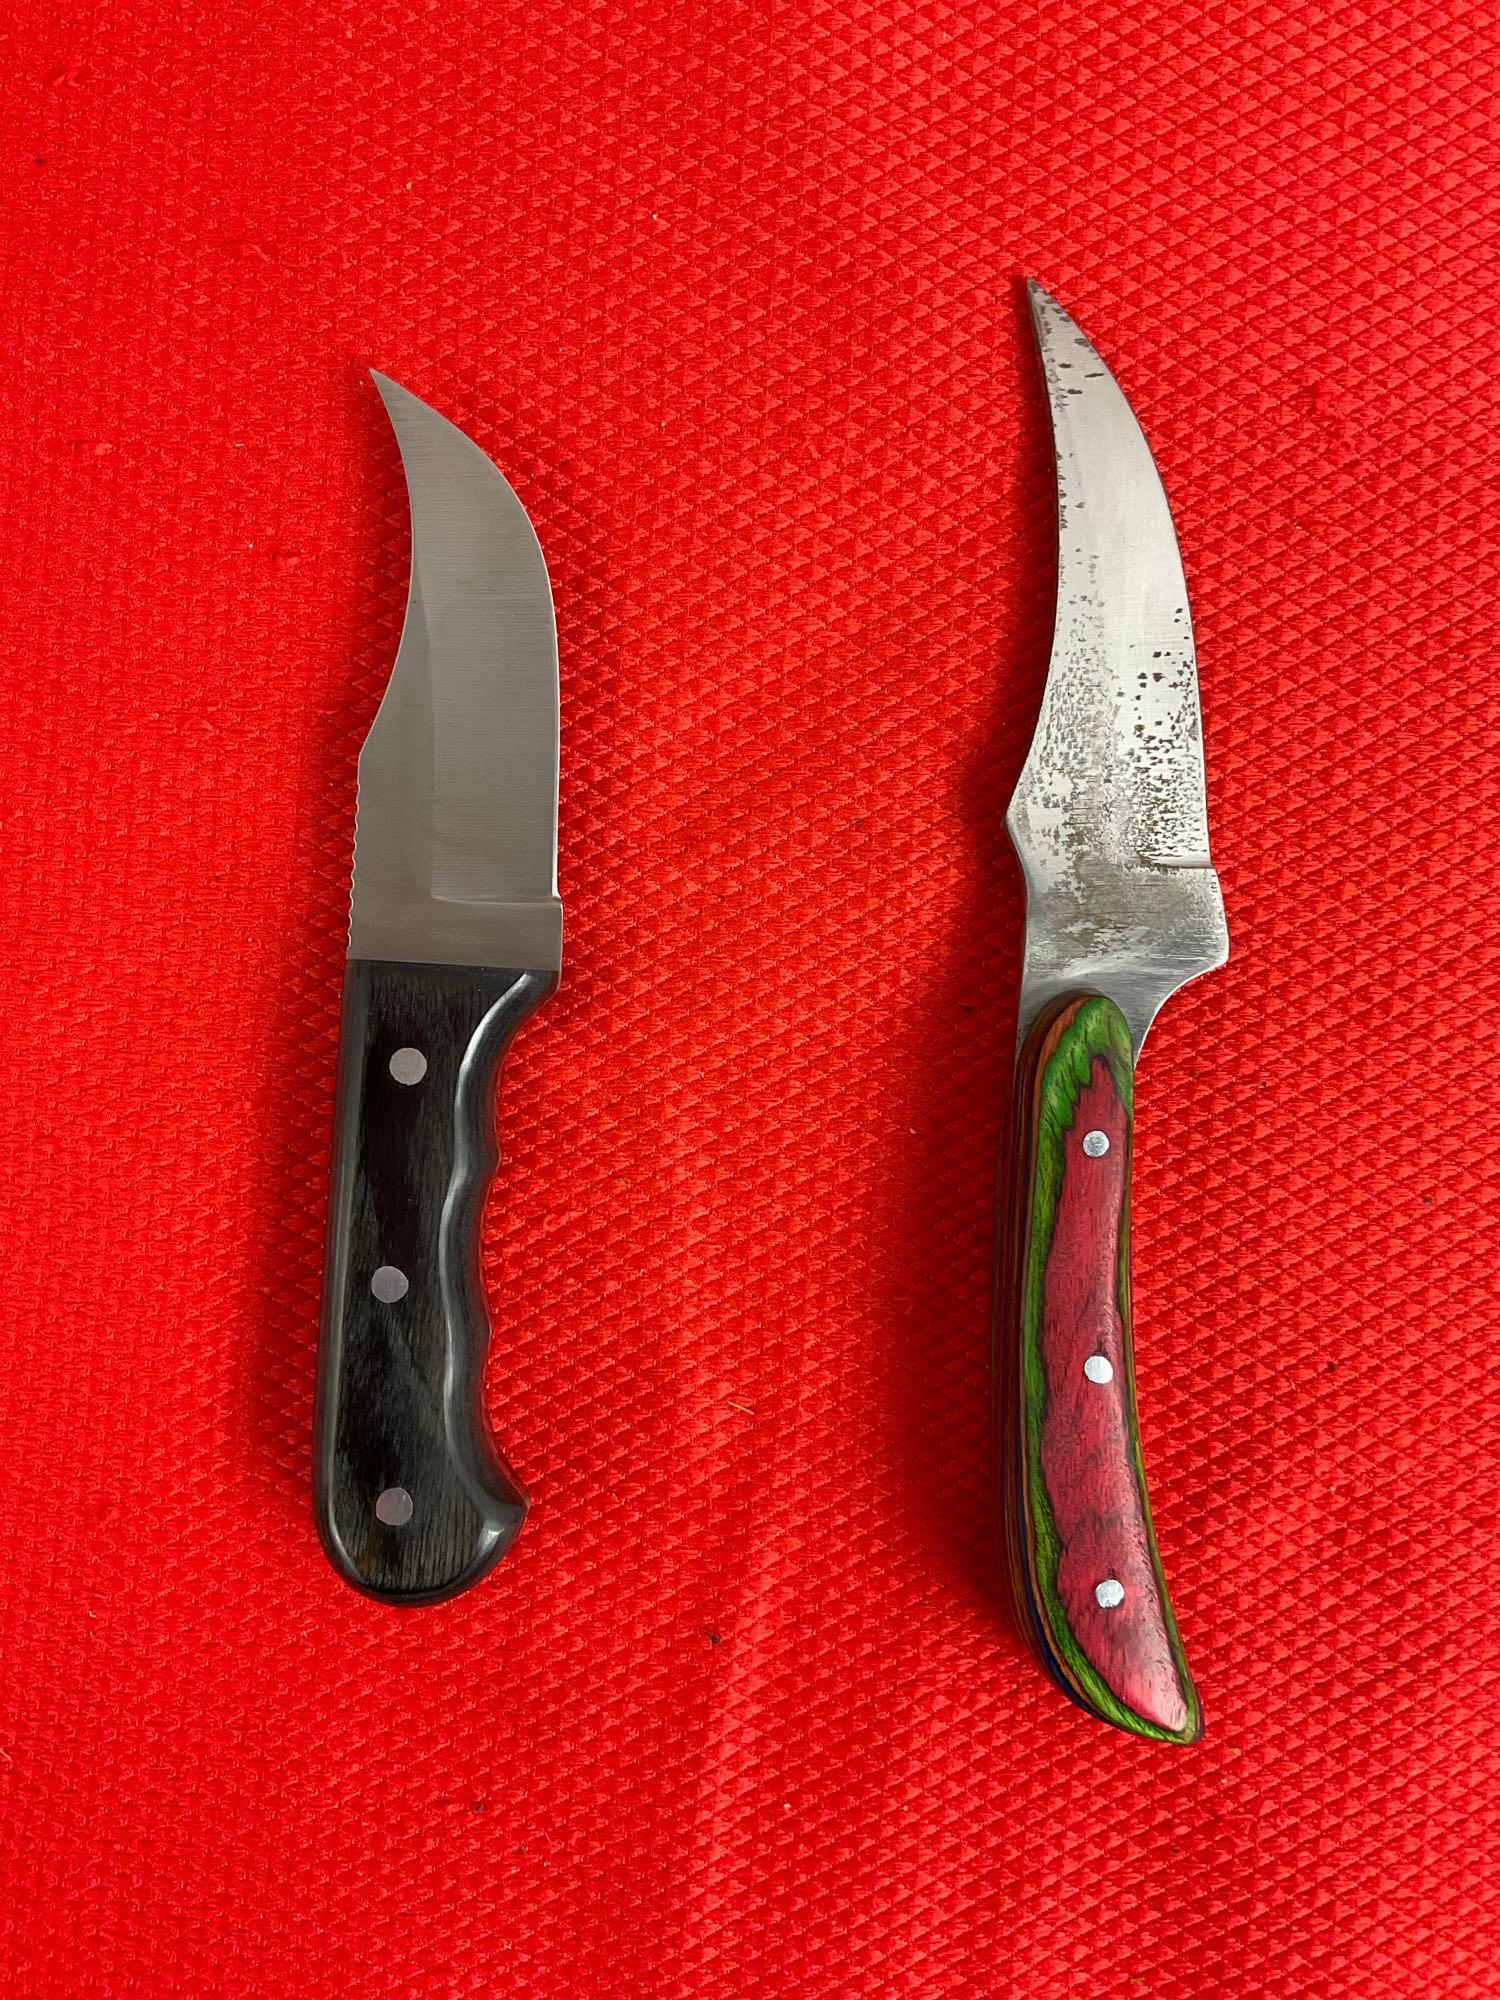 2 pcs Steel Fixed Blade Skinner Knives w/ Wooden Handles, Models 203240-MC & 211187. See pics.